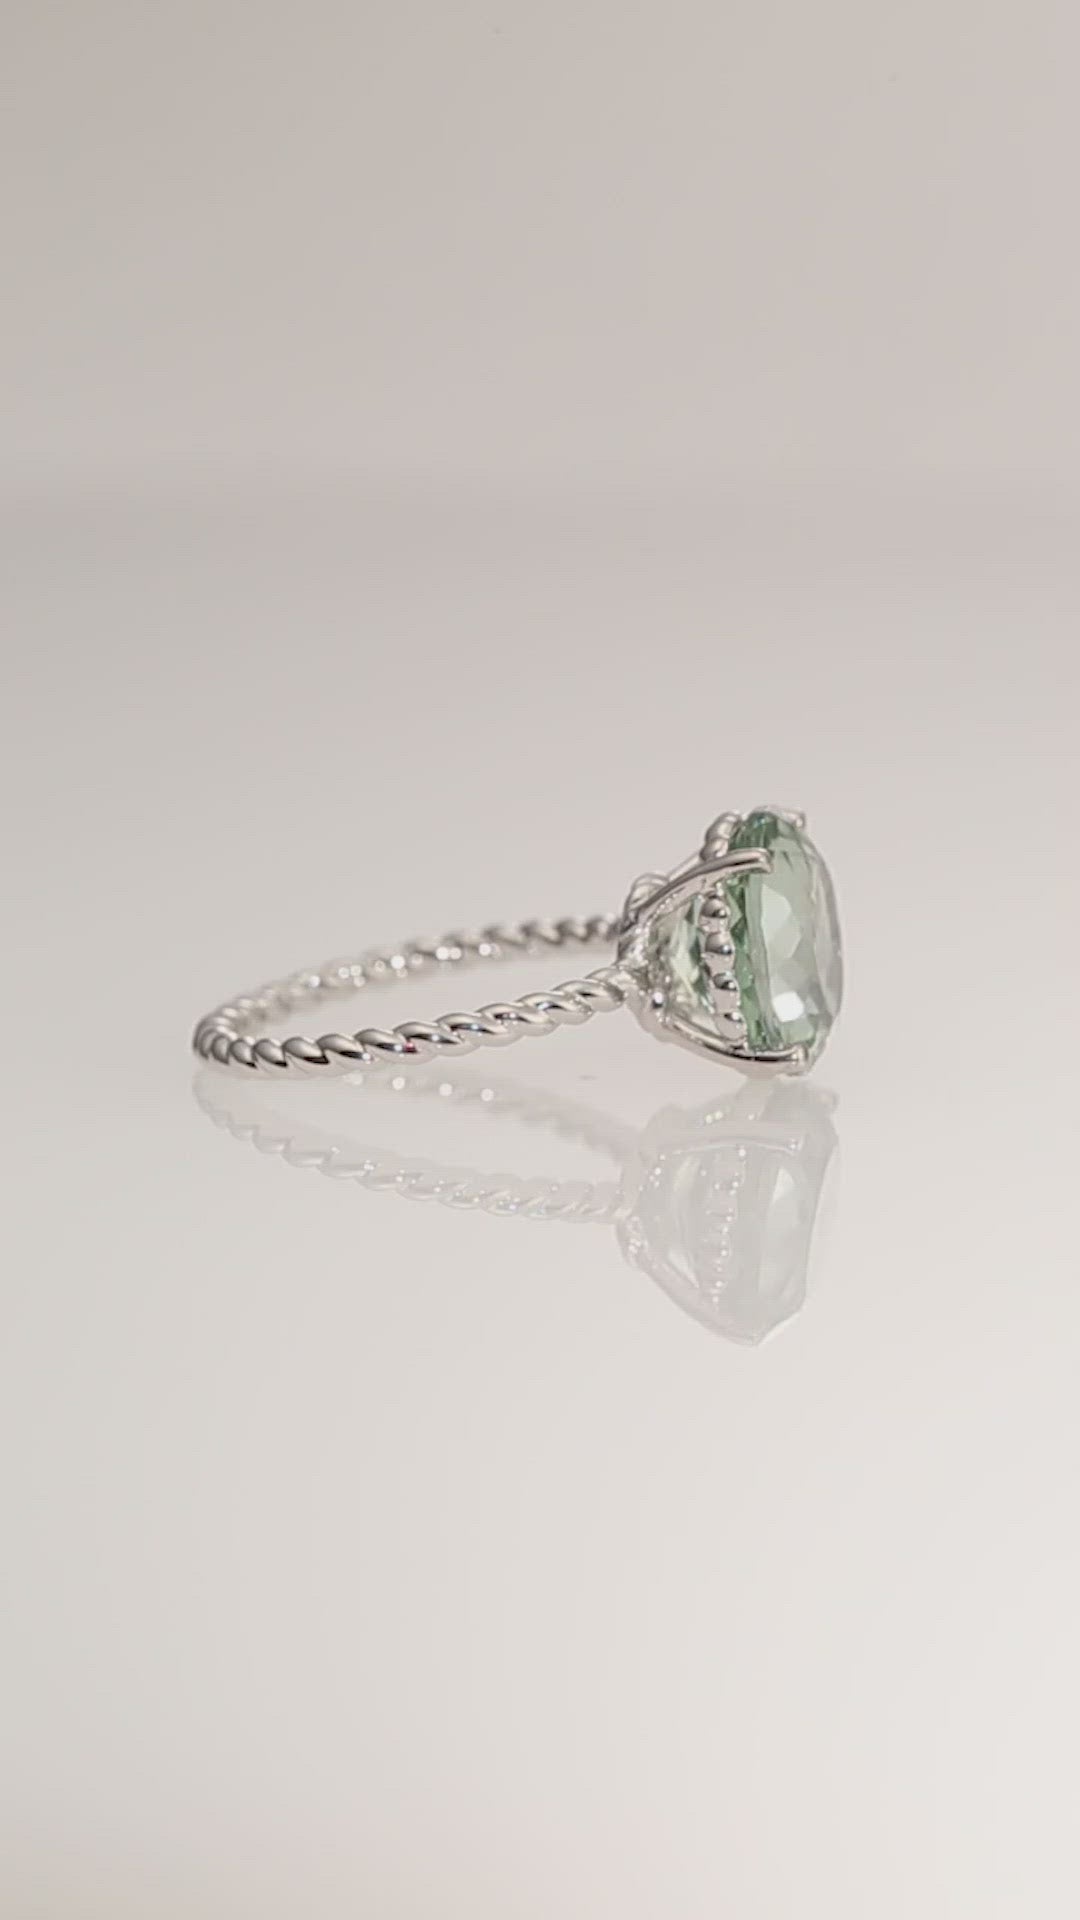 5 Carat Green Amethyst Gemstone Ring, 